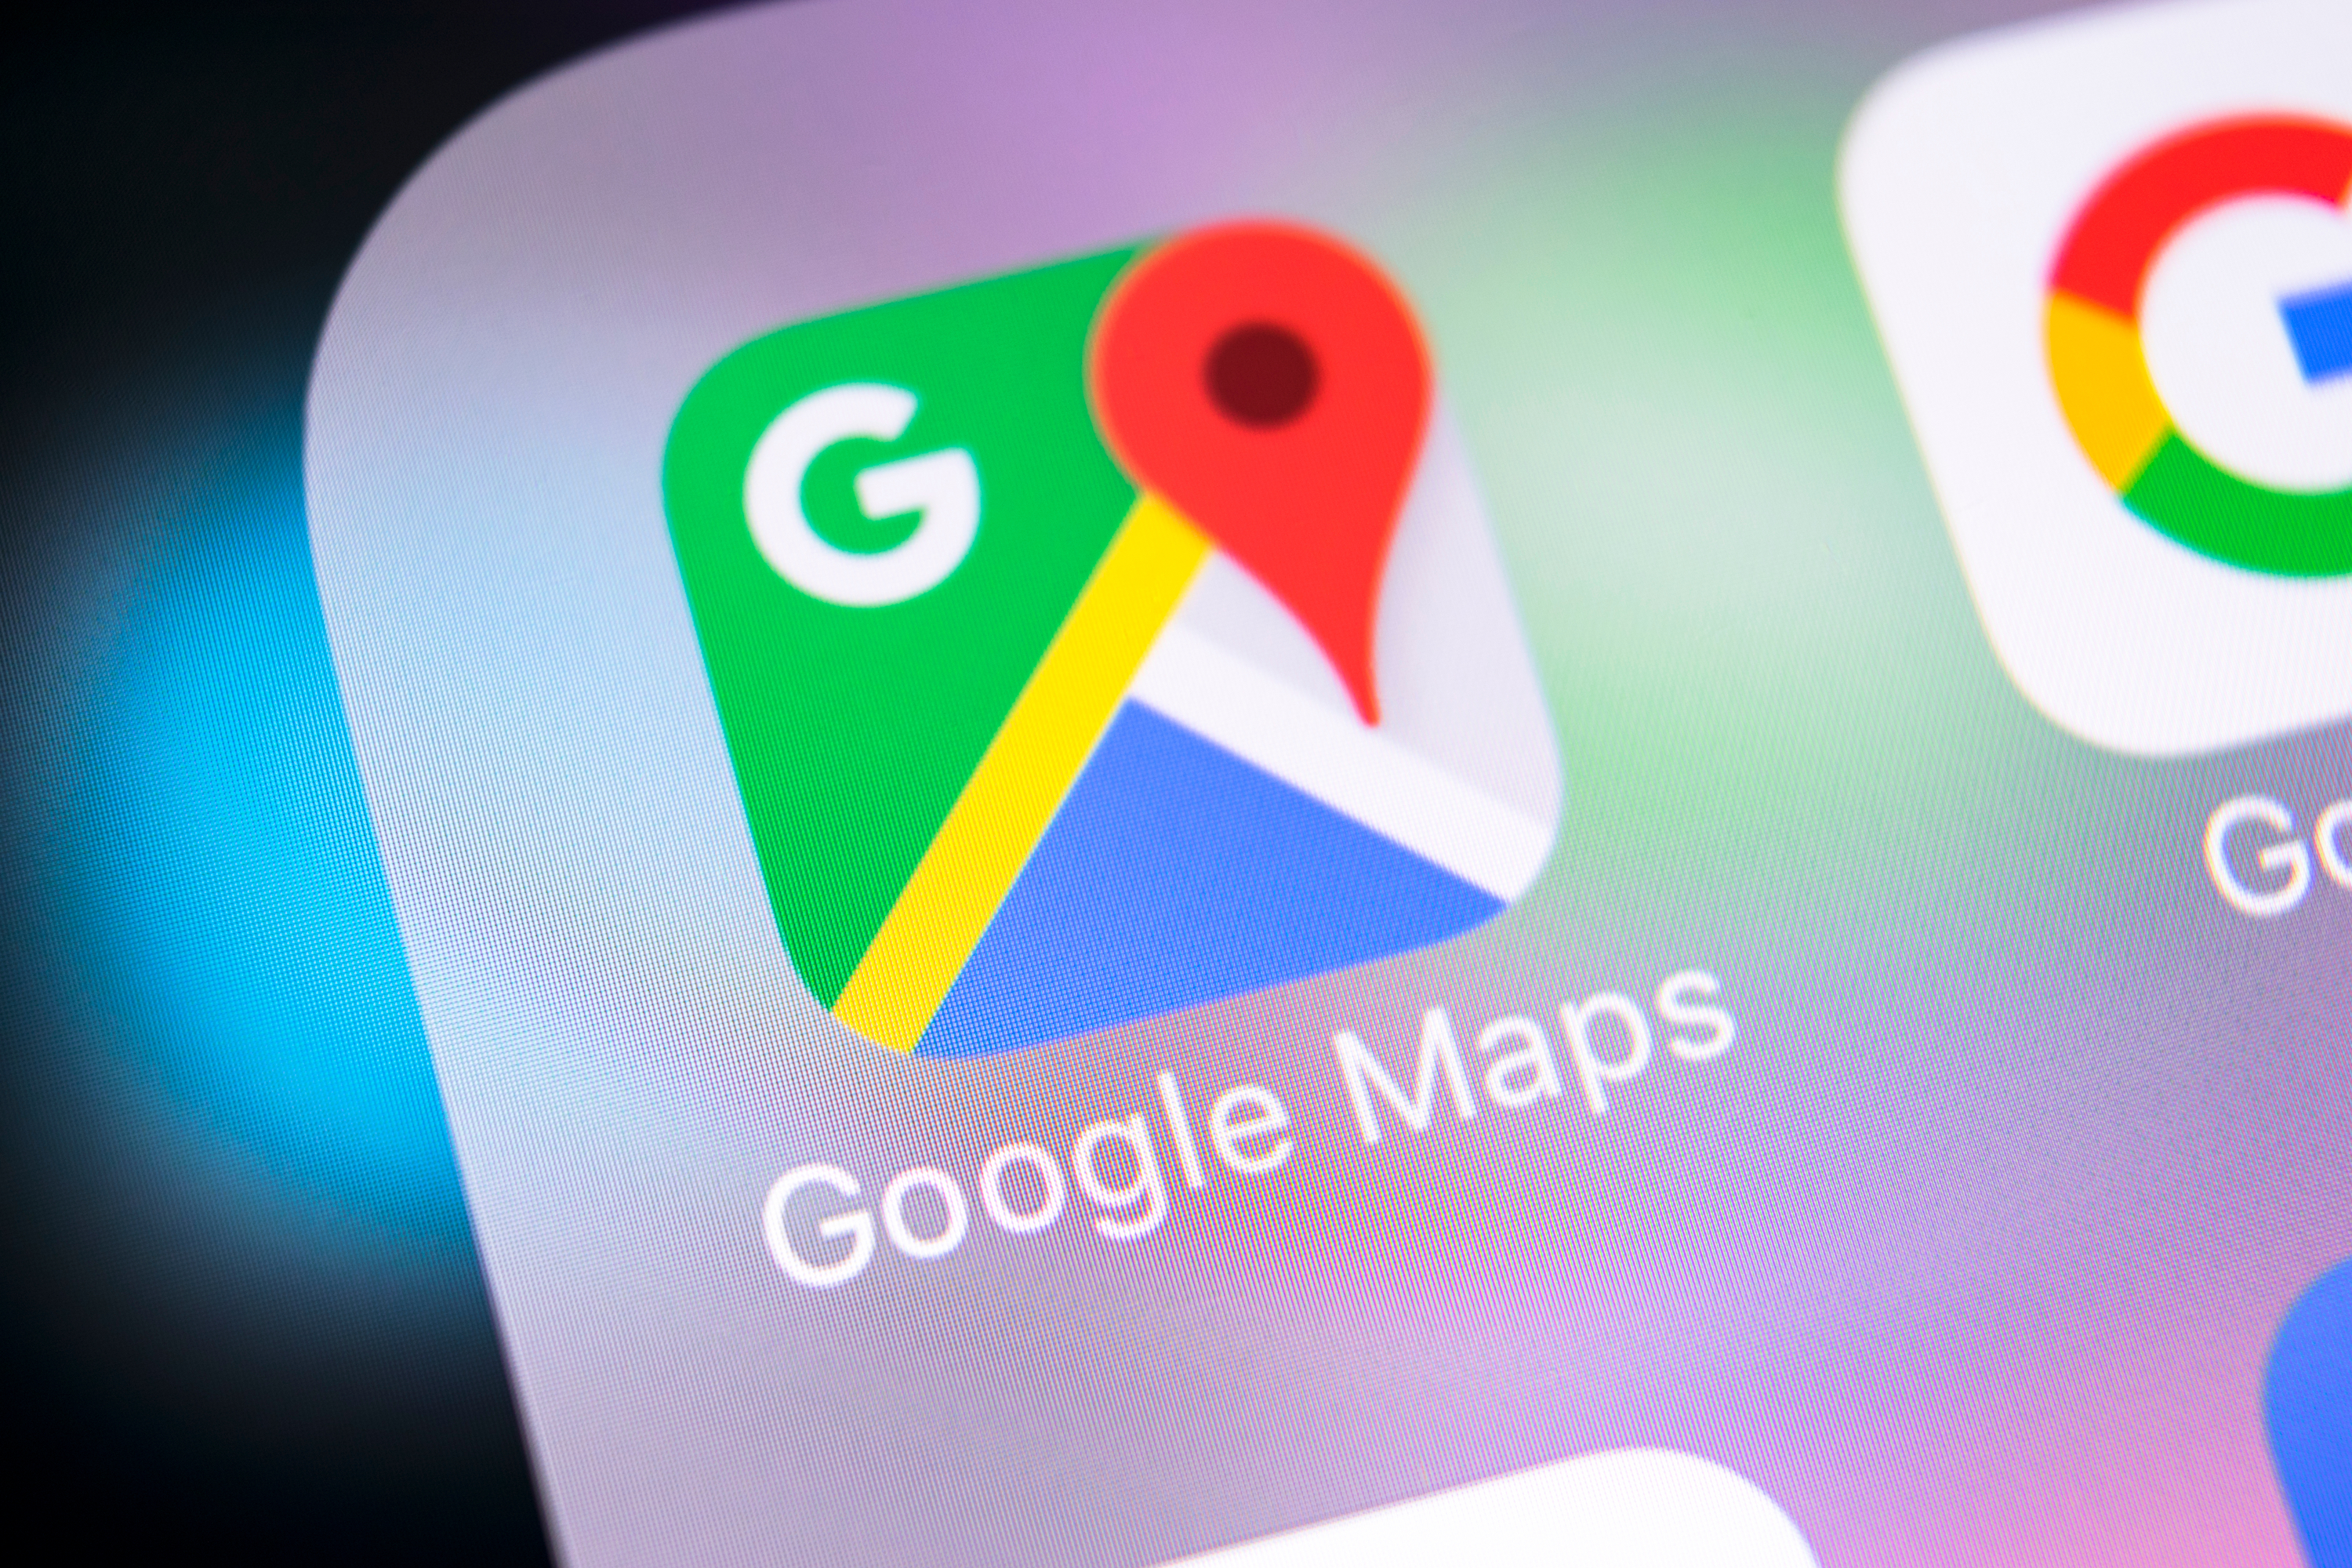 google map icon on phone screen